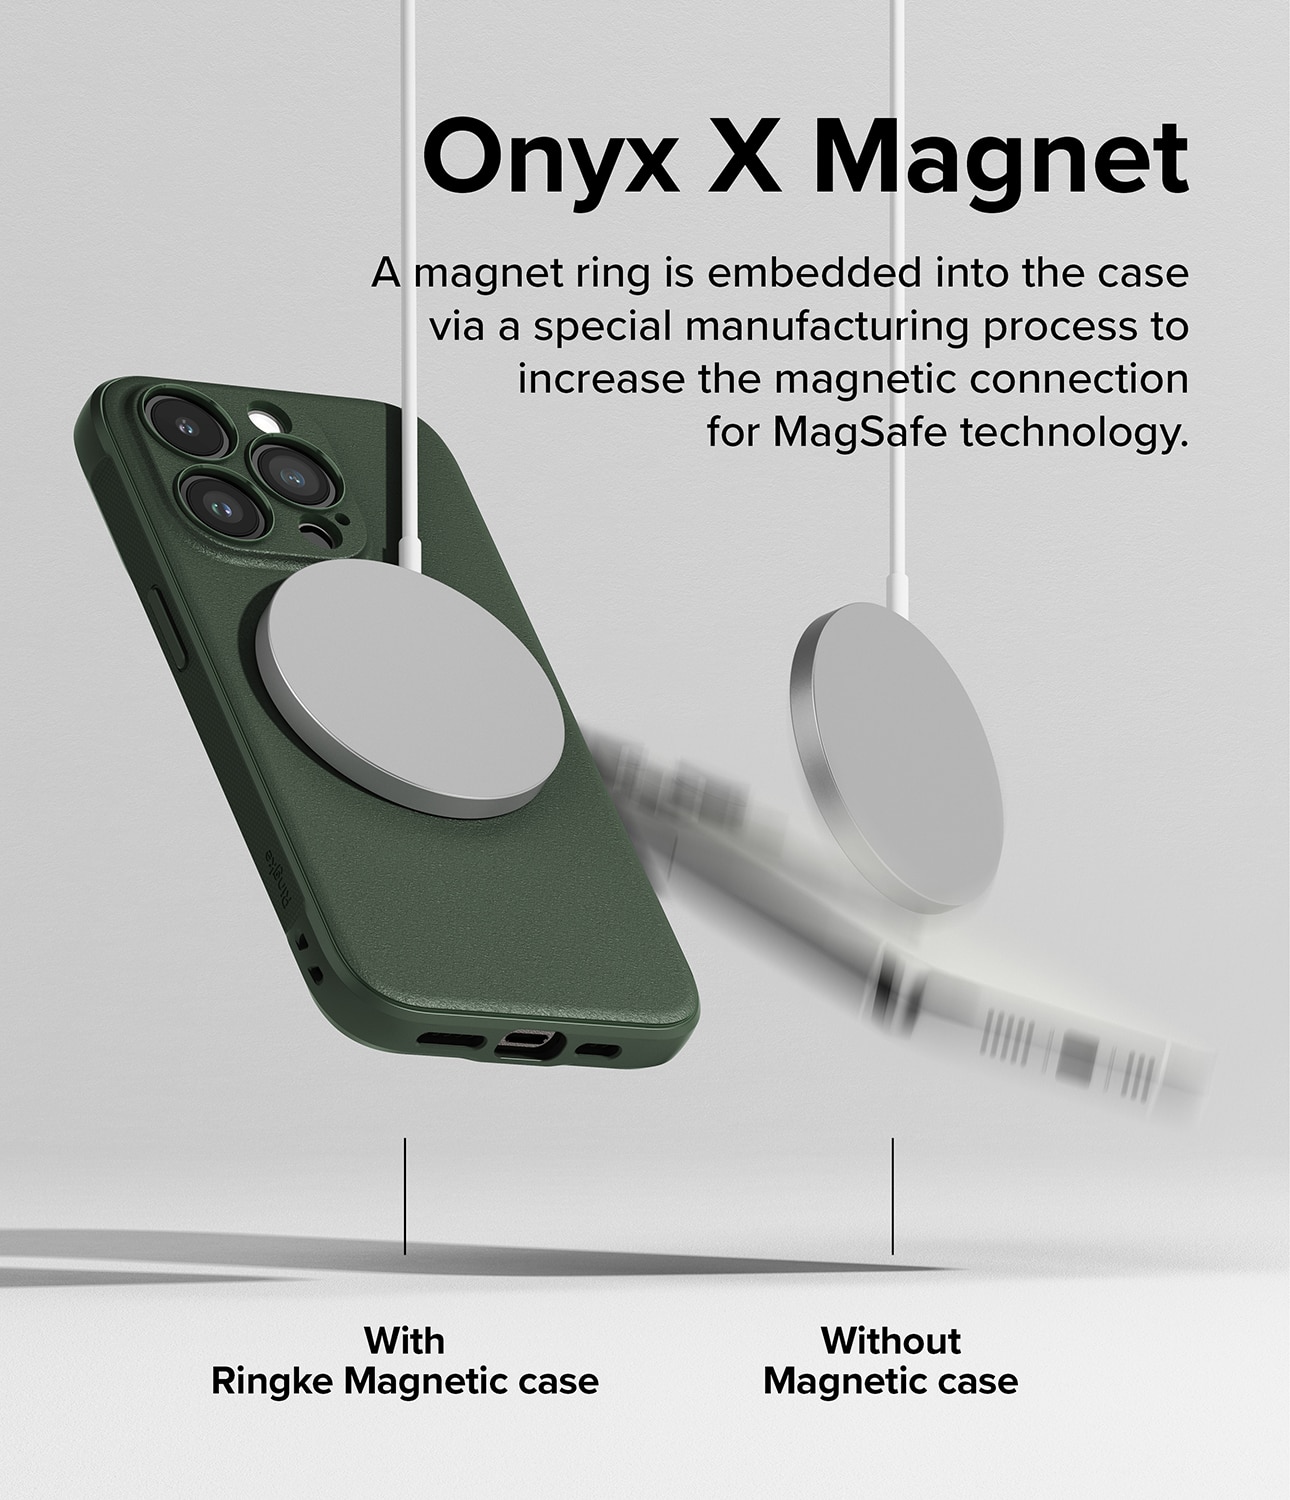 Funda Onyx Magnetic iPhone 15 Pro Dark Green